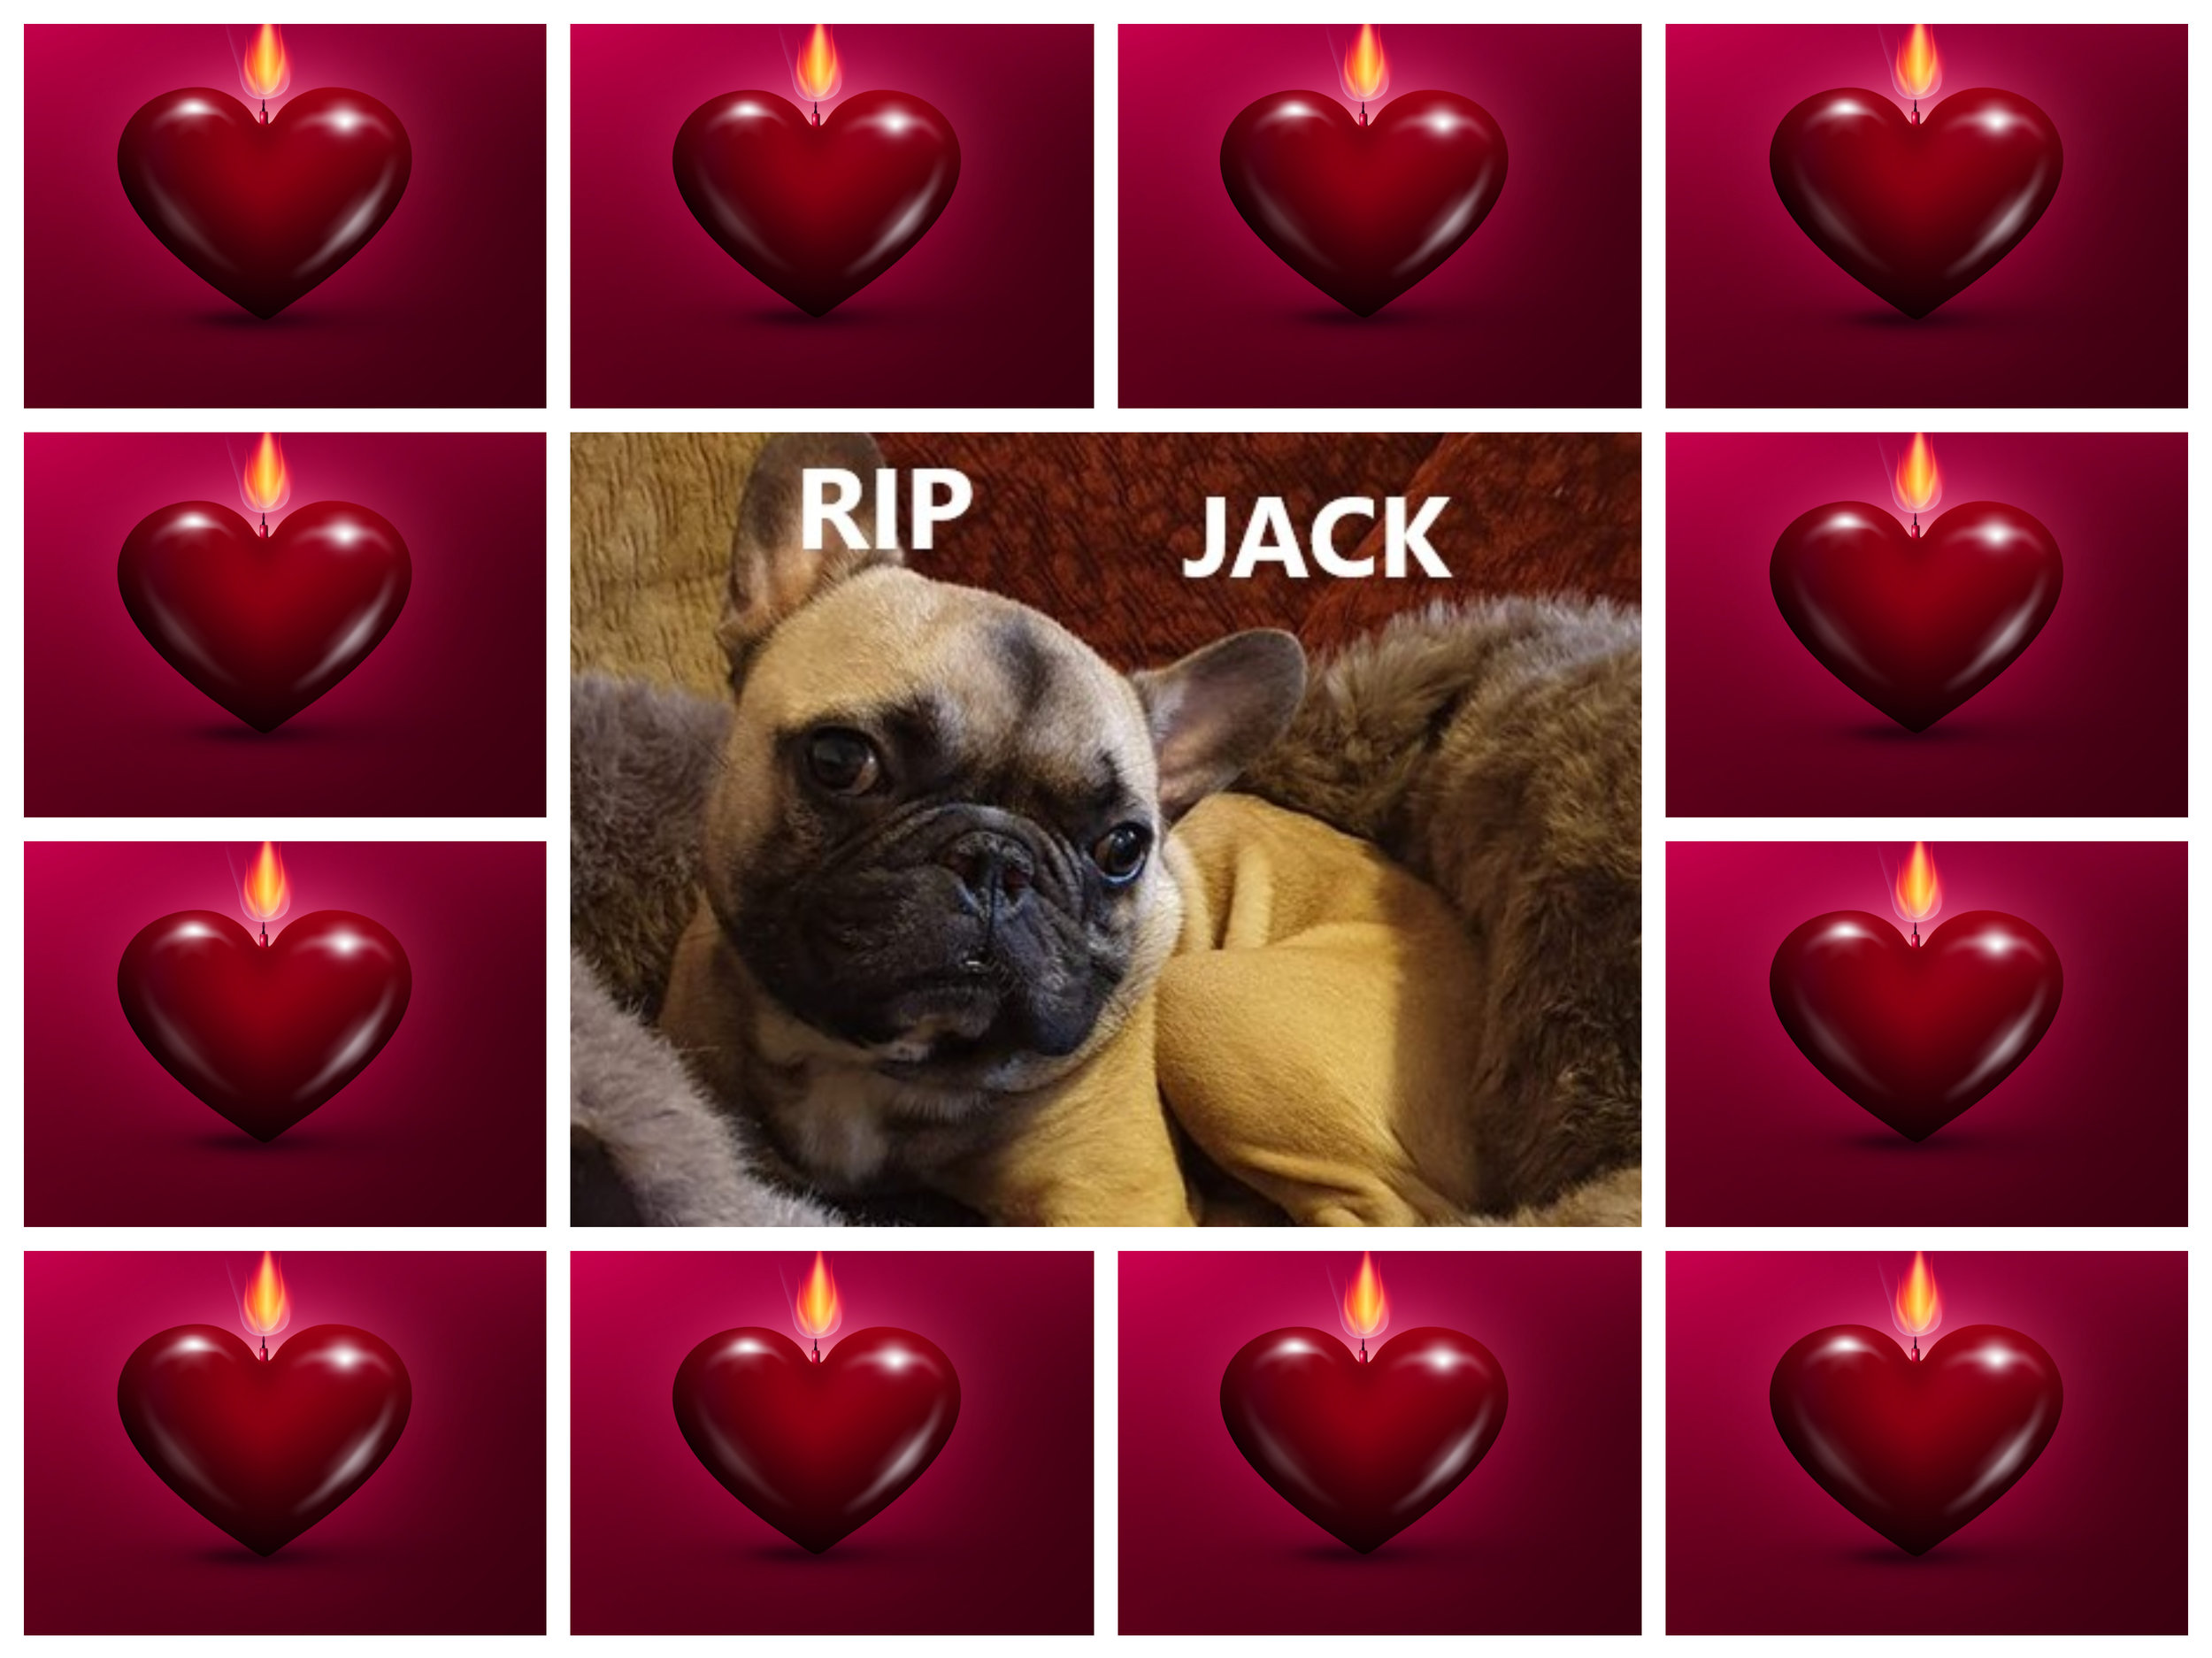 RIP JACK.jpg